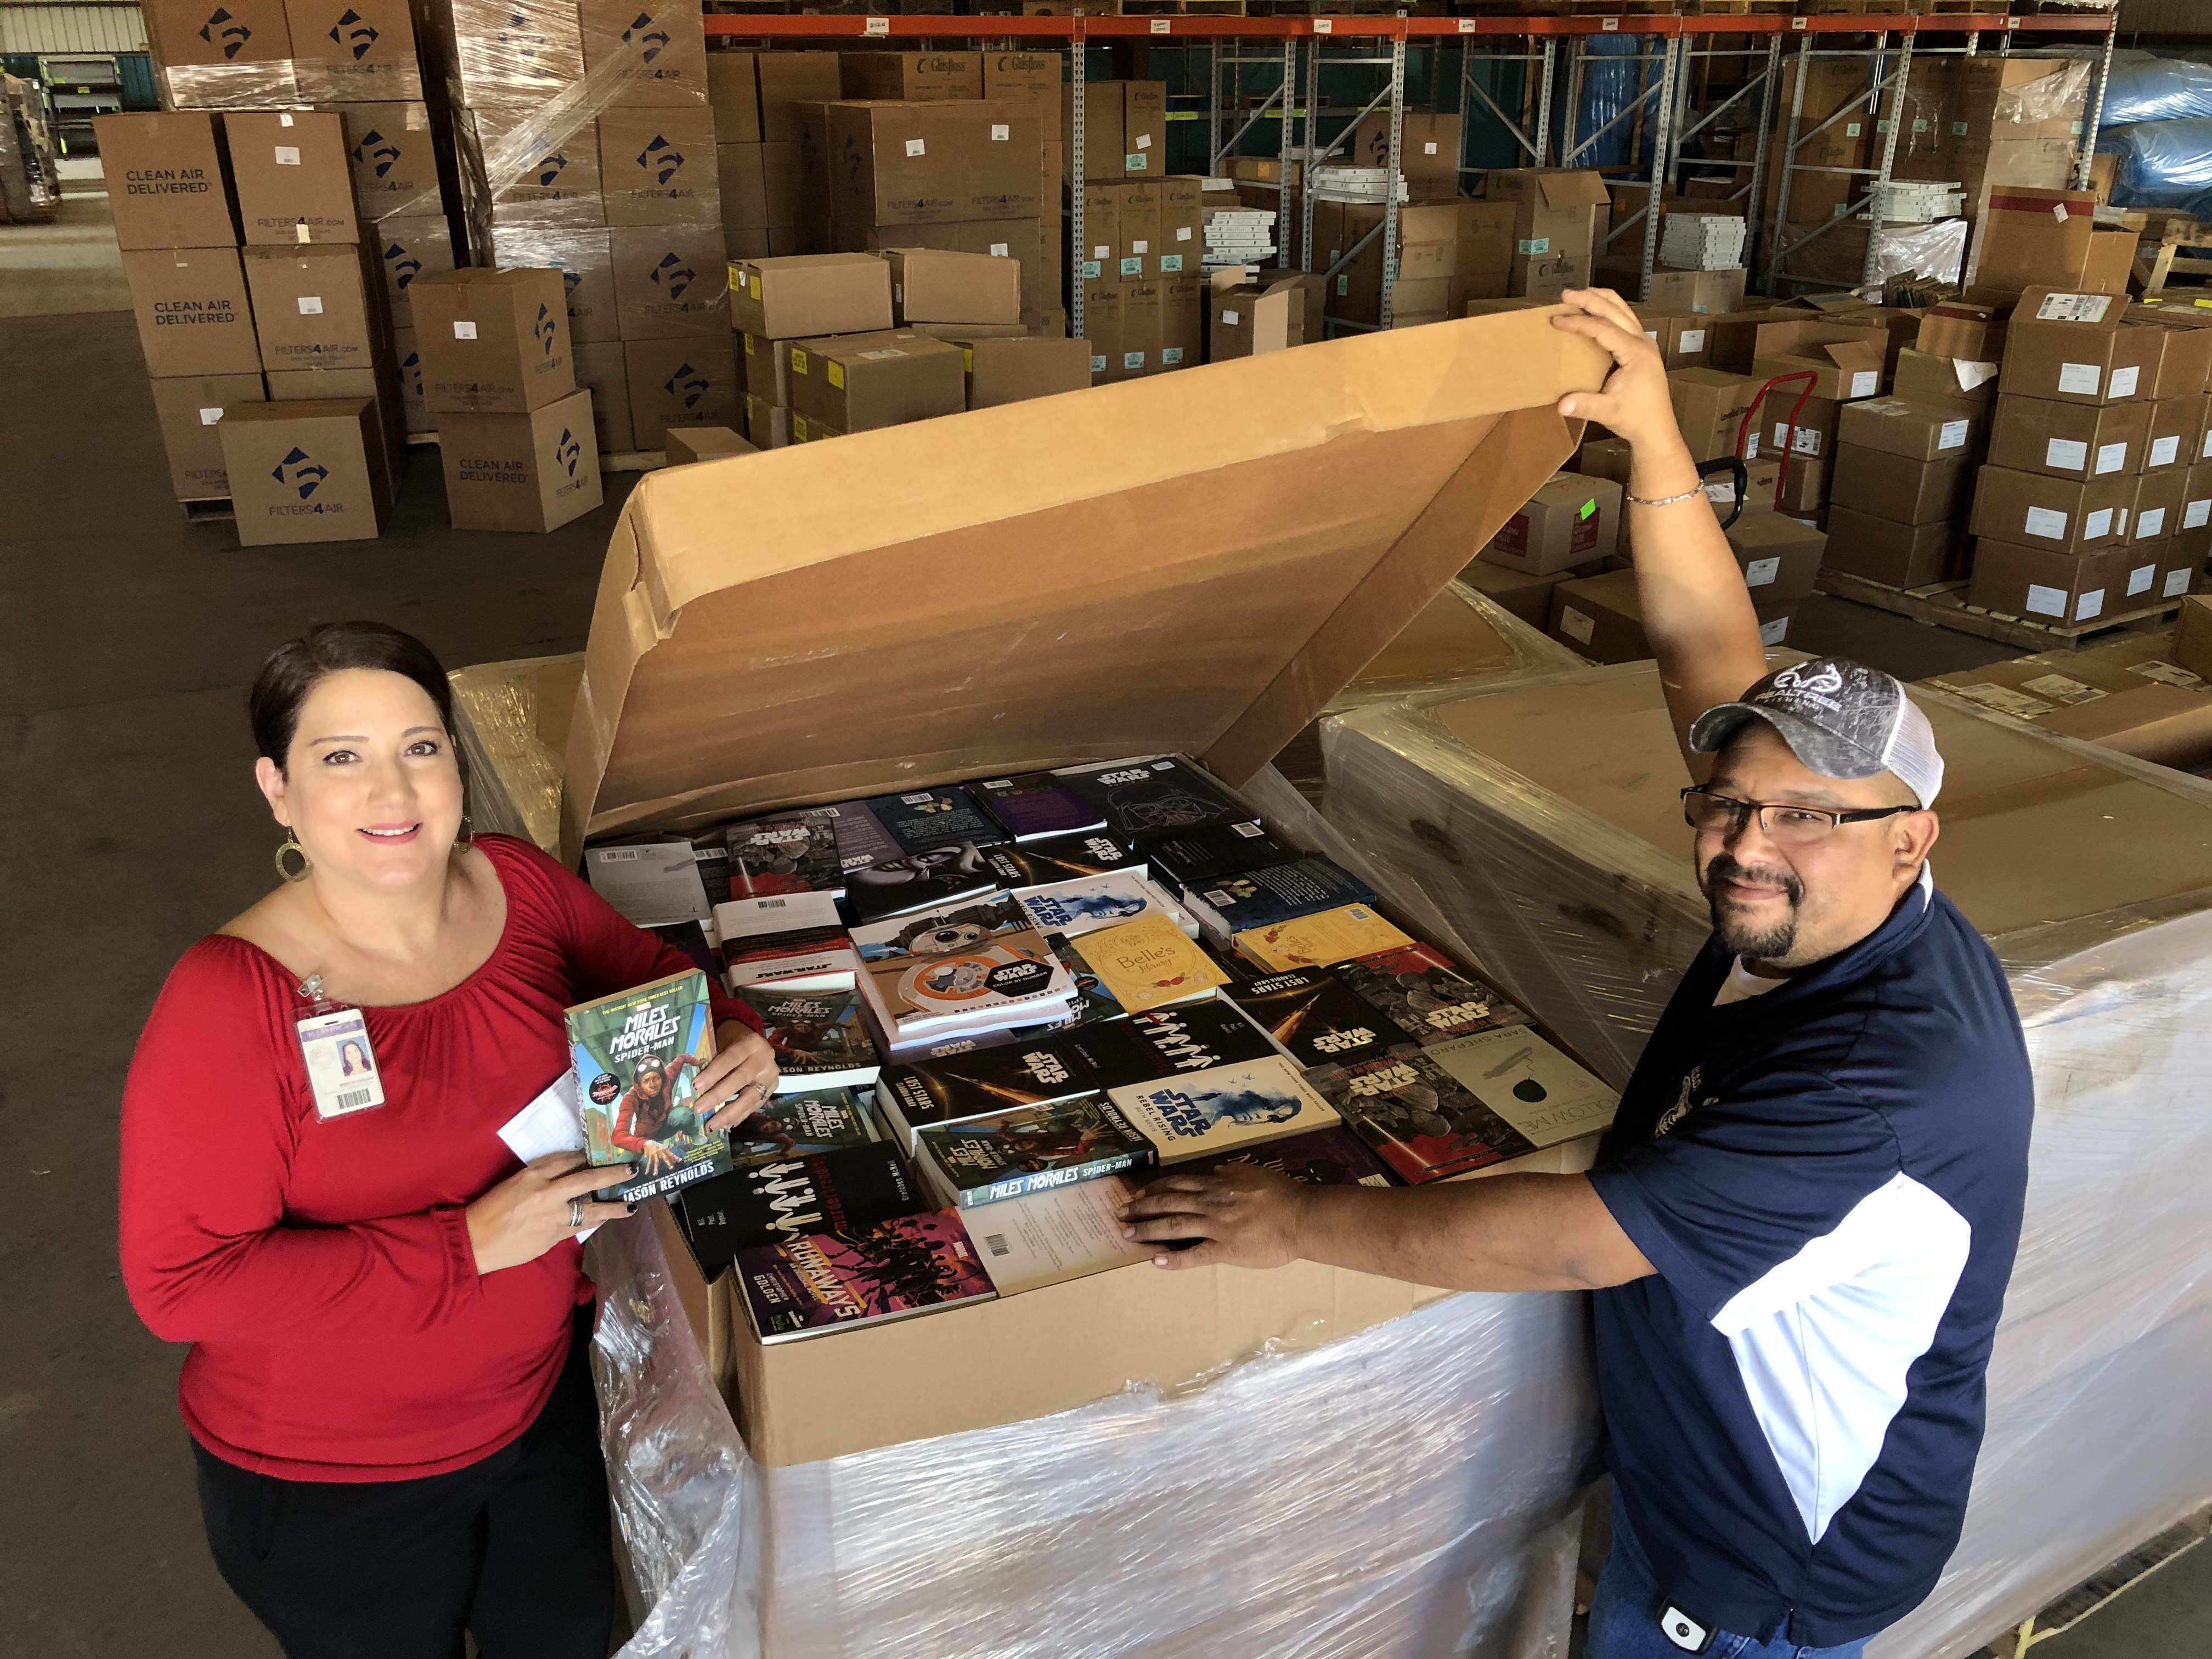 The Molina Foundation donates more than 10K free books